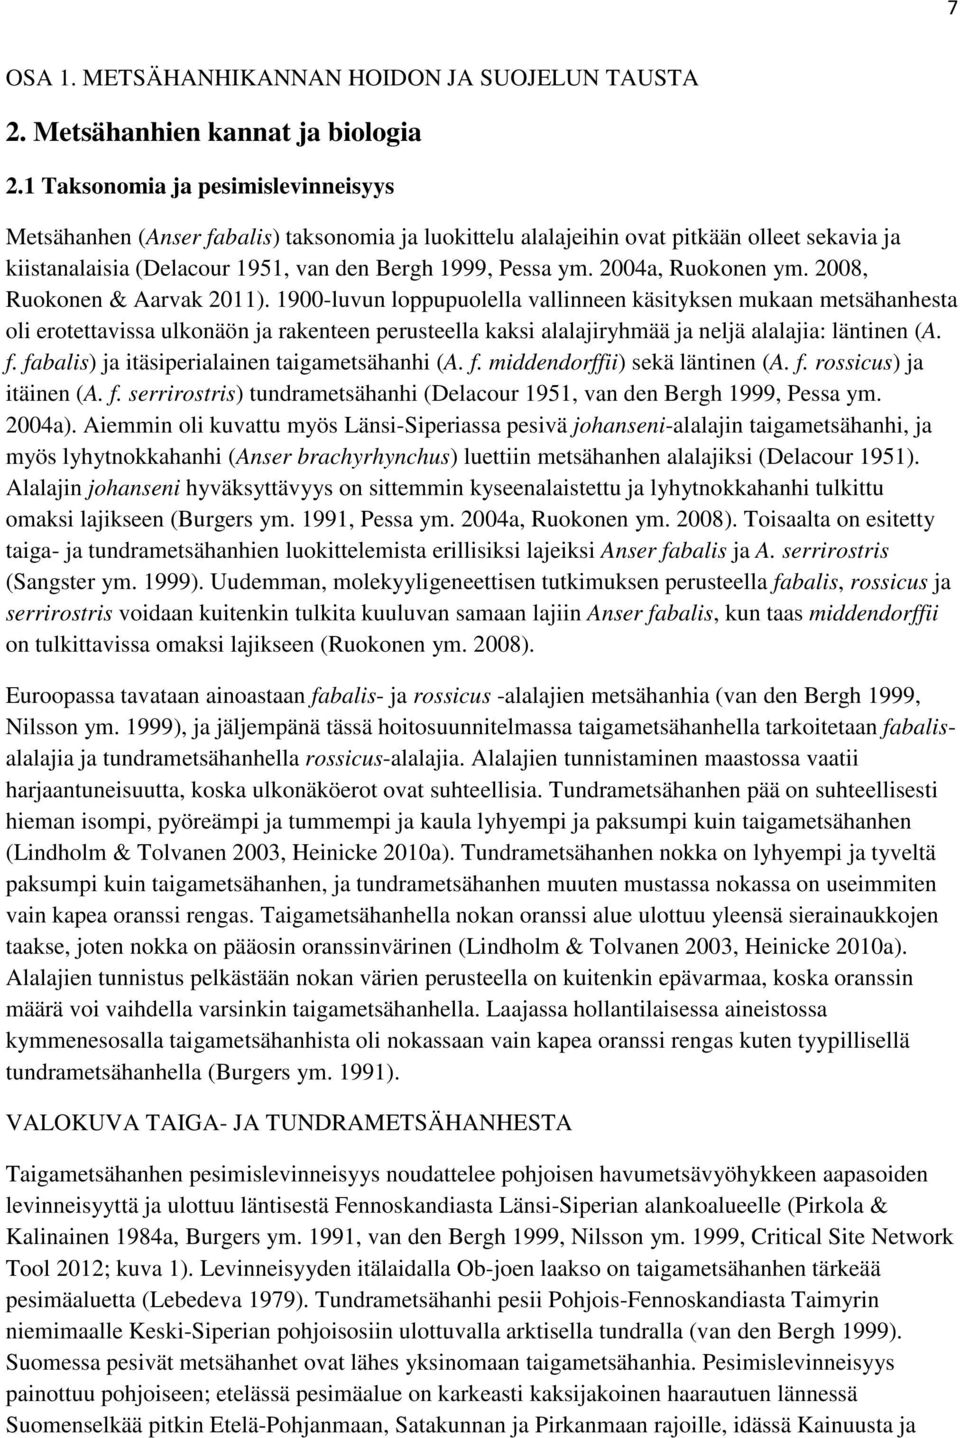 2004a, Ruokonen ym. 2008, Ruokonen & Aarvak 2011).